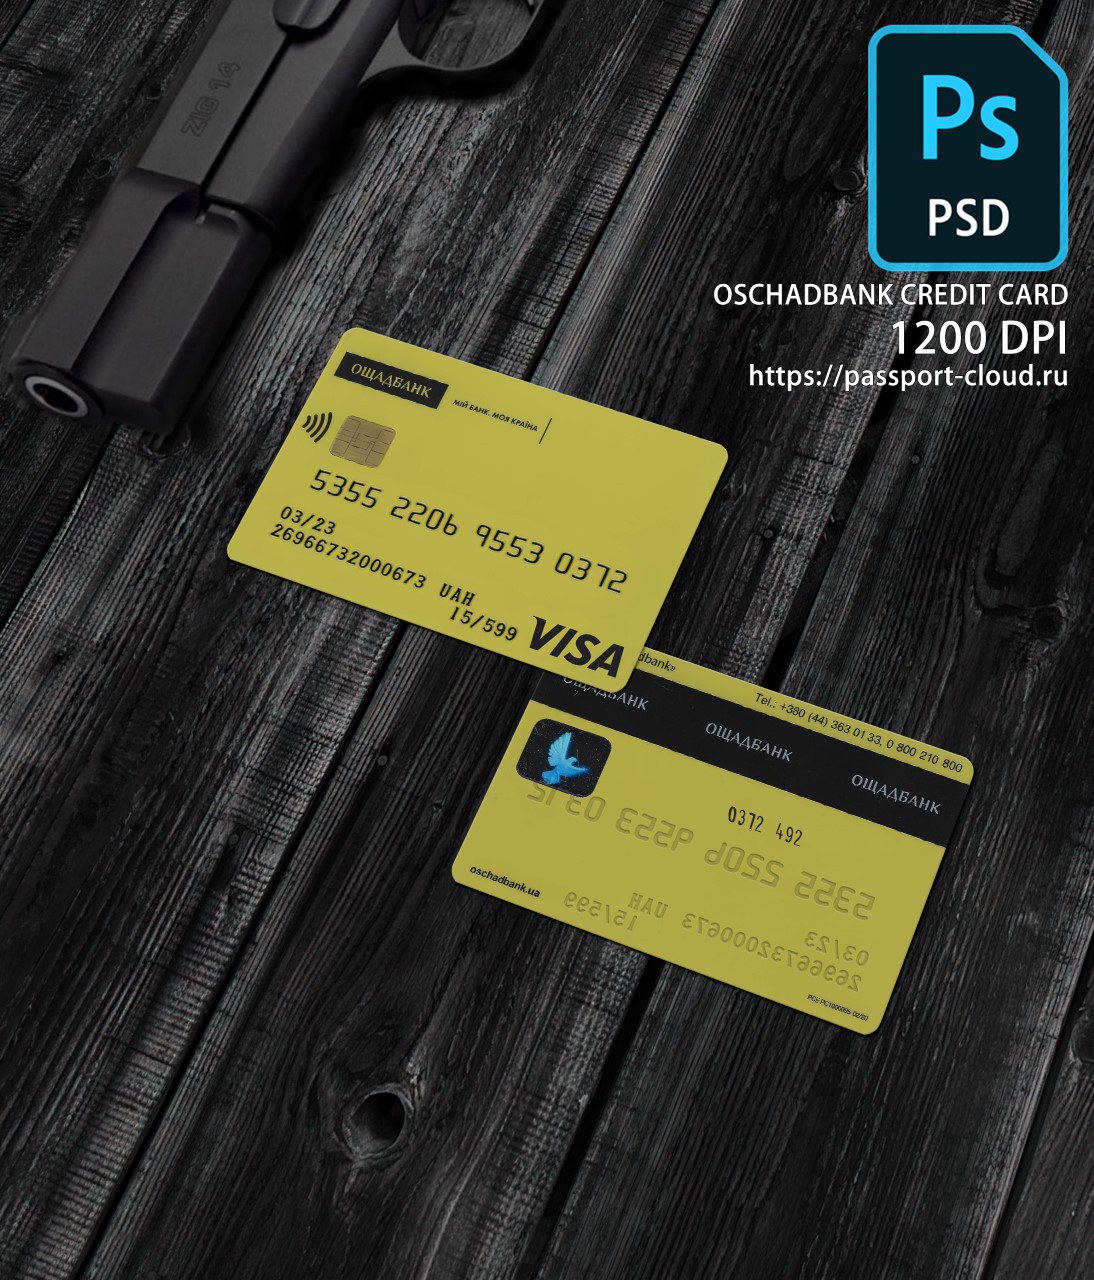 OSCHADBANK Credit Card PSD-0